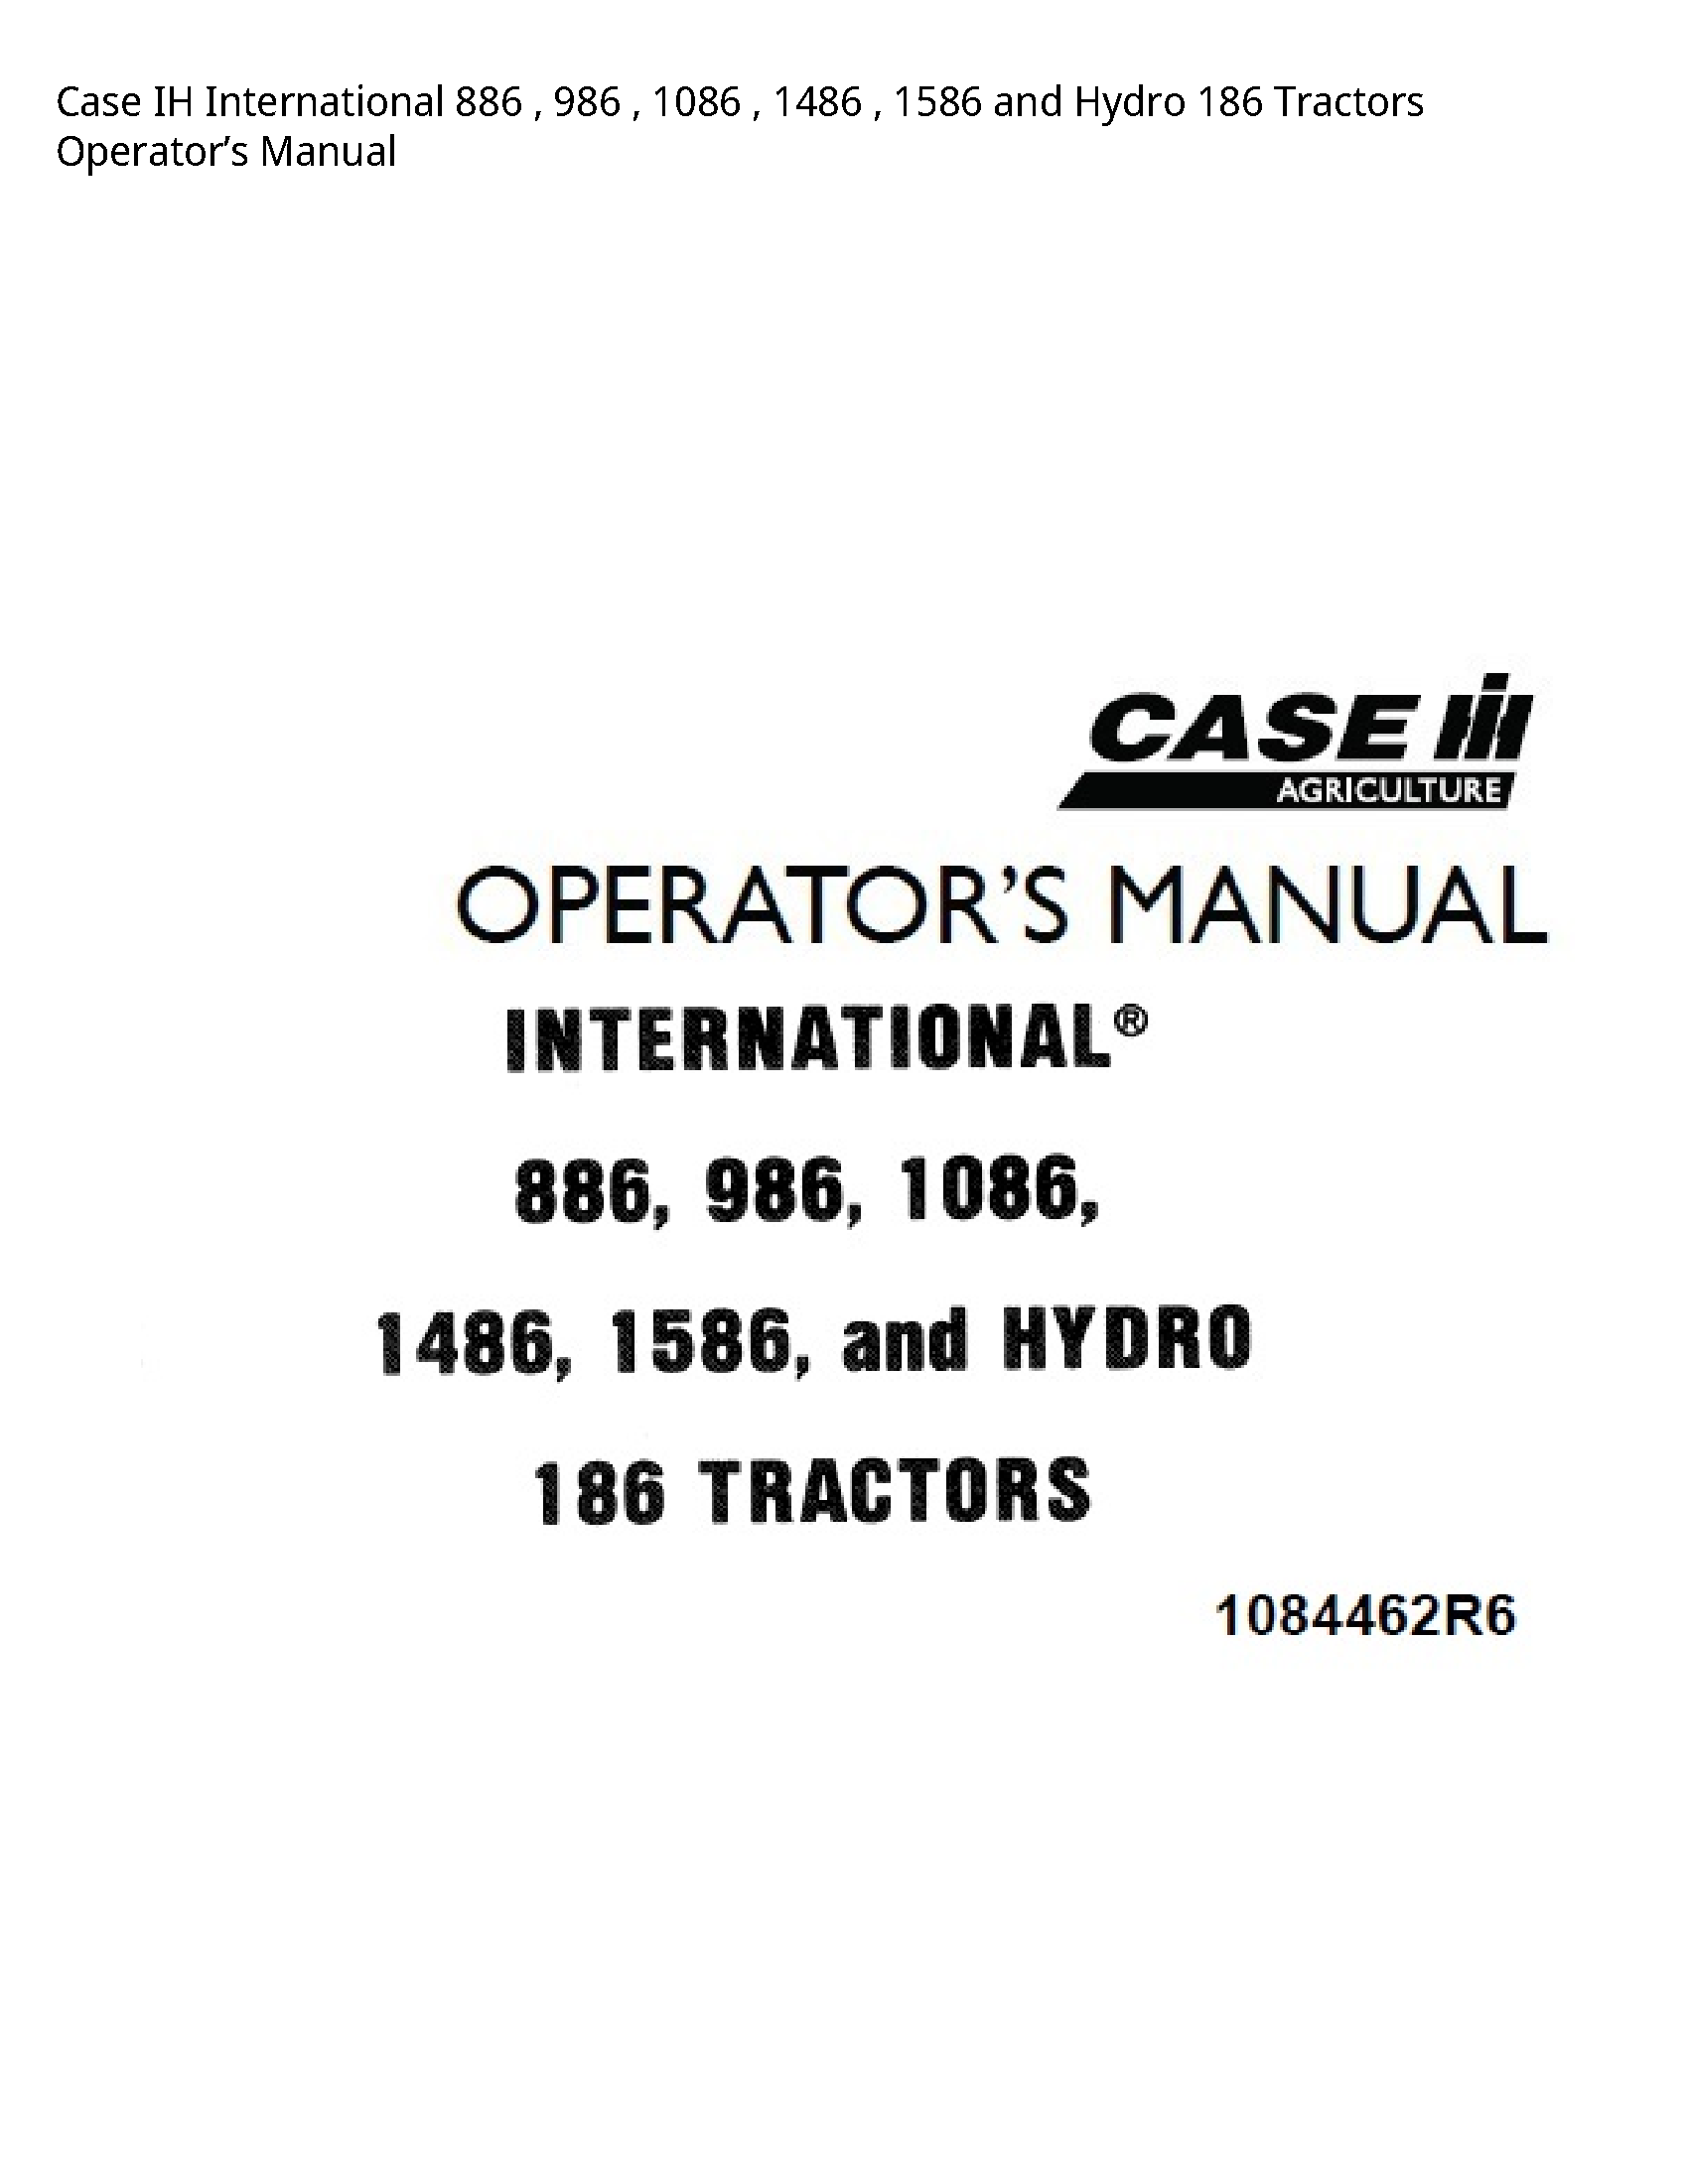 Case/Case IH 886 IH International  Hydro Tractors Operator’s manual